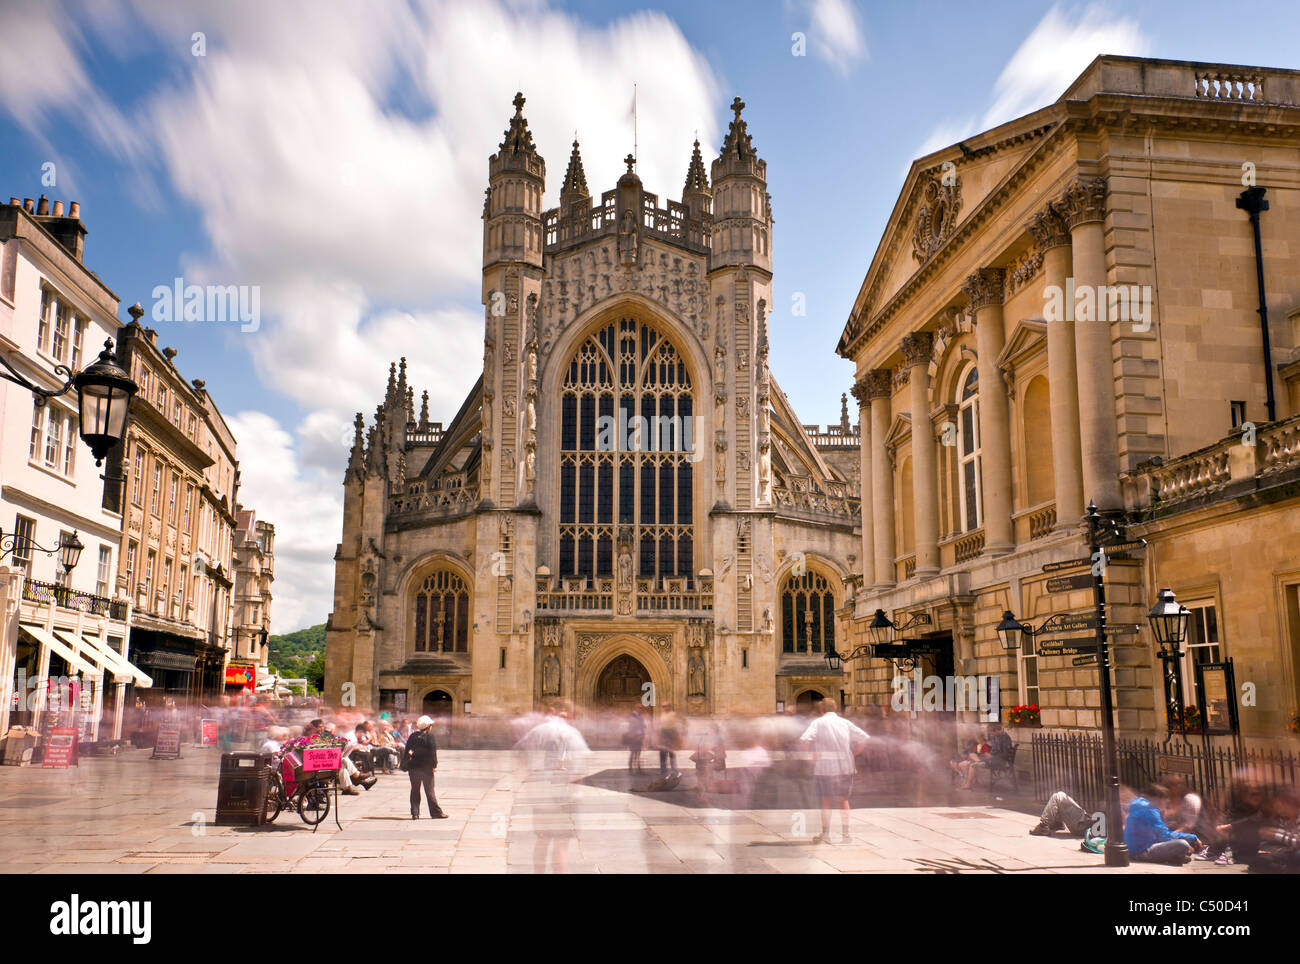 The City of Bath, Somerset - England Stock Photo